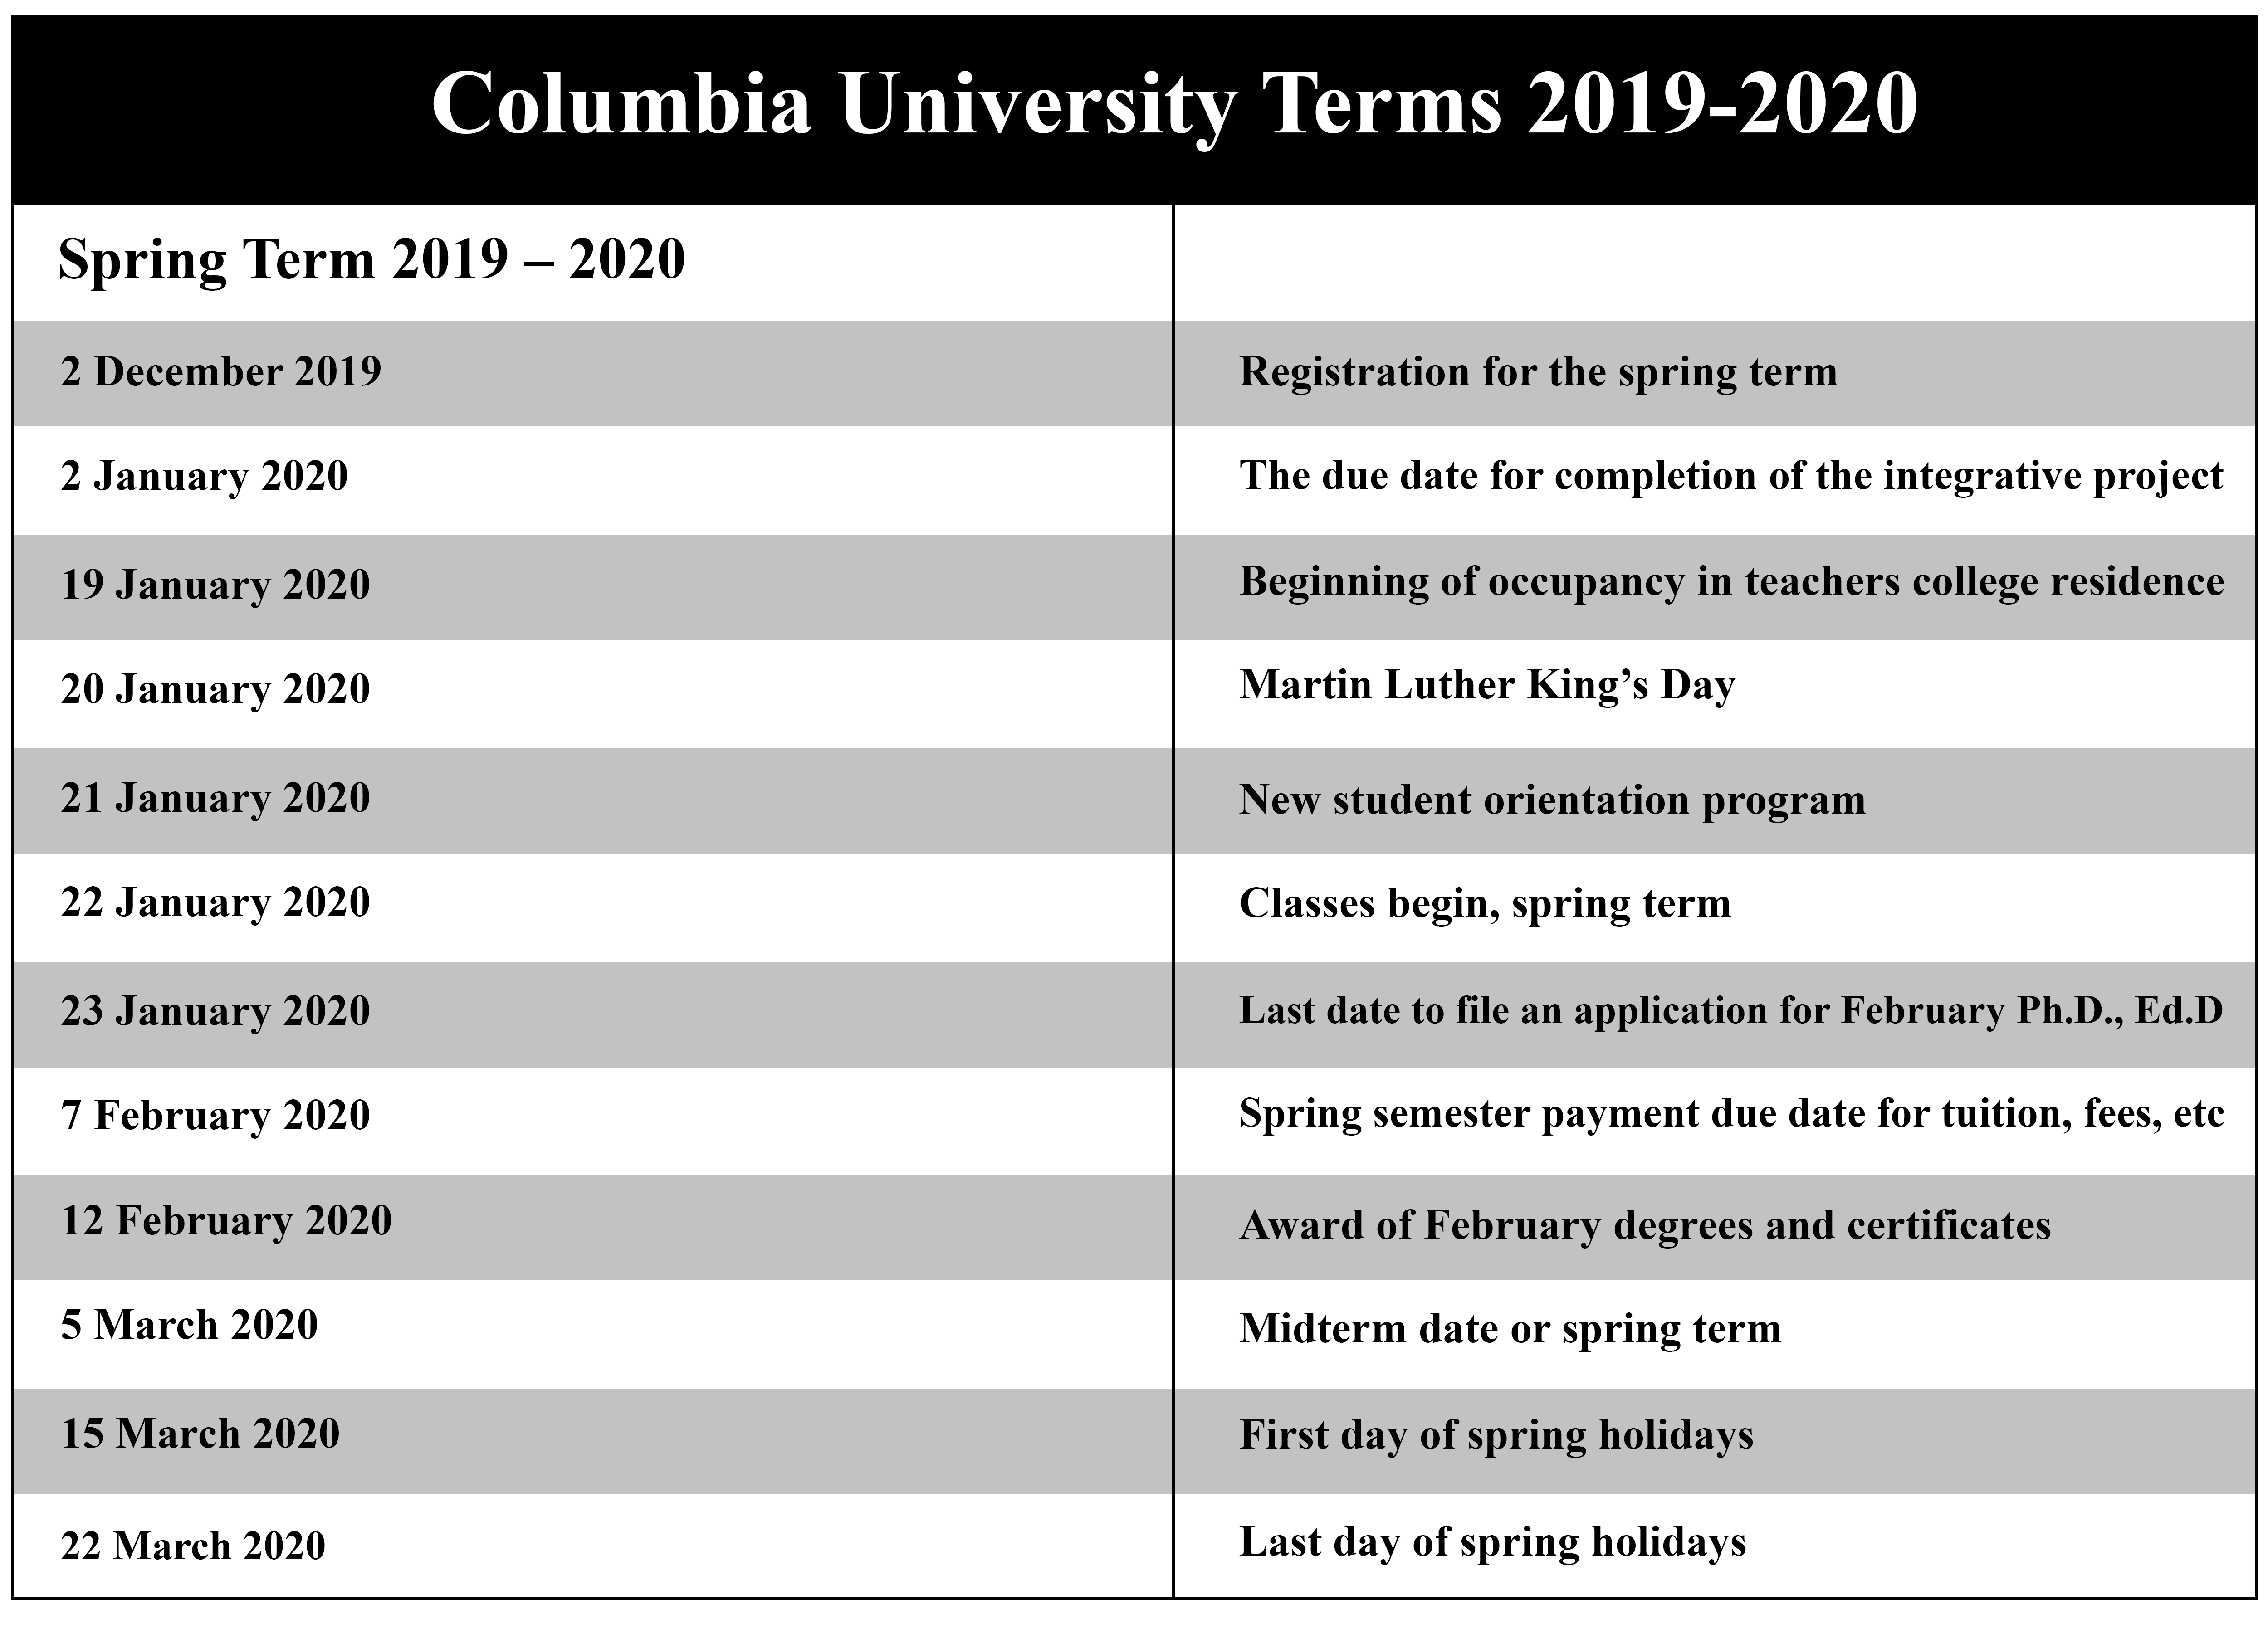 Columbia University Calendar 2019 2020(Spring Term)